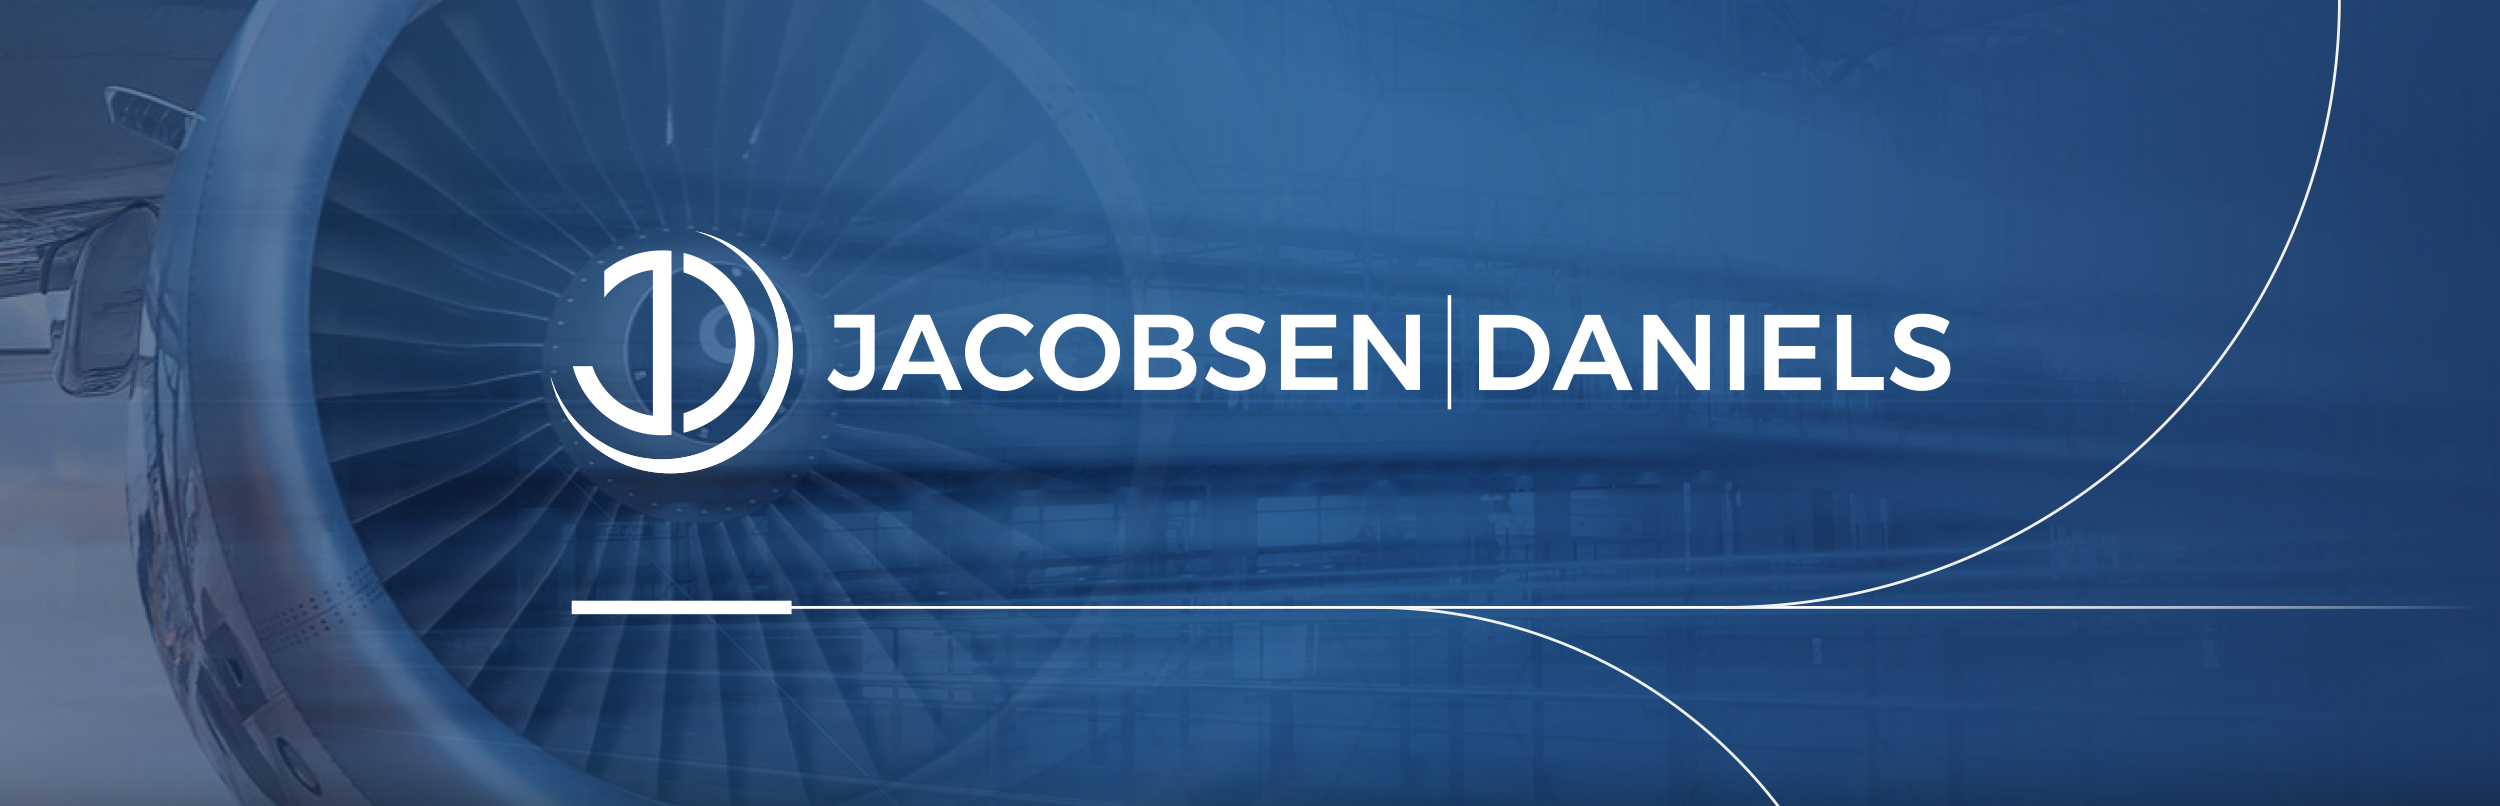 jacobsen daniels website brand development